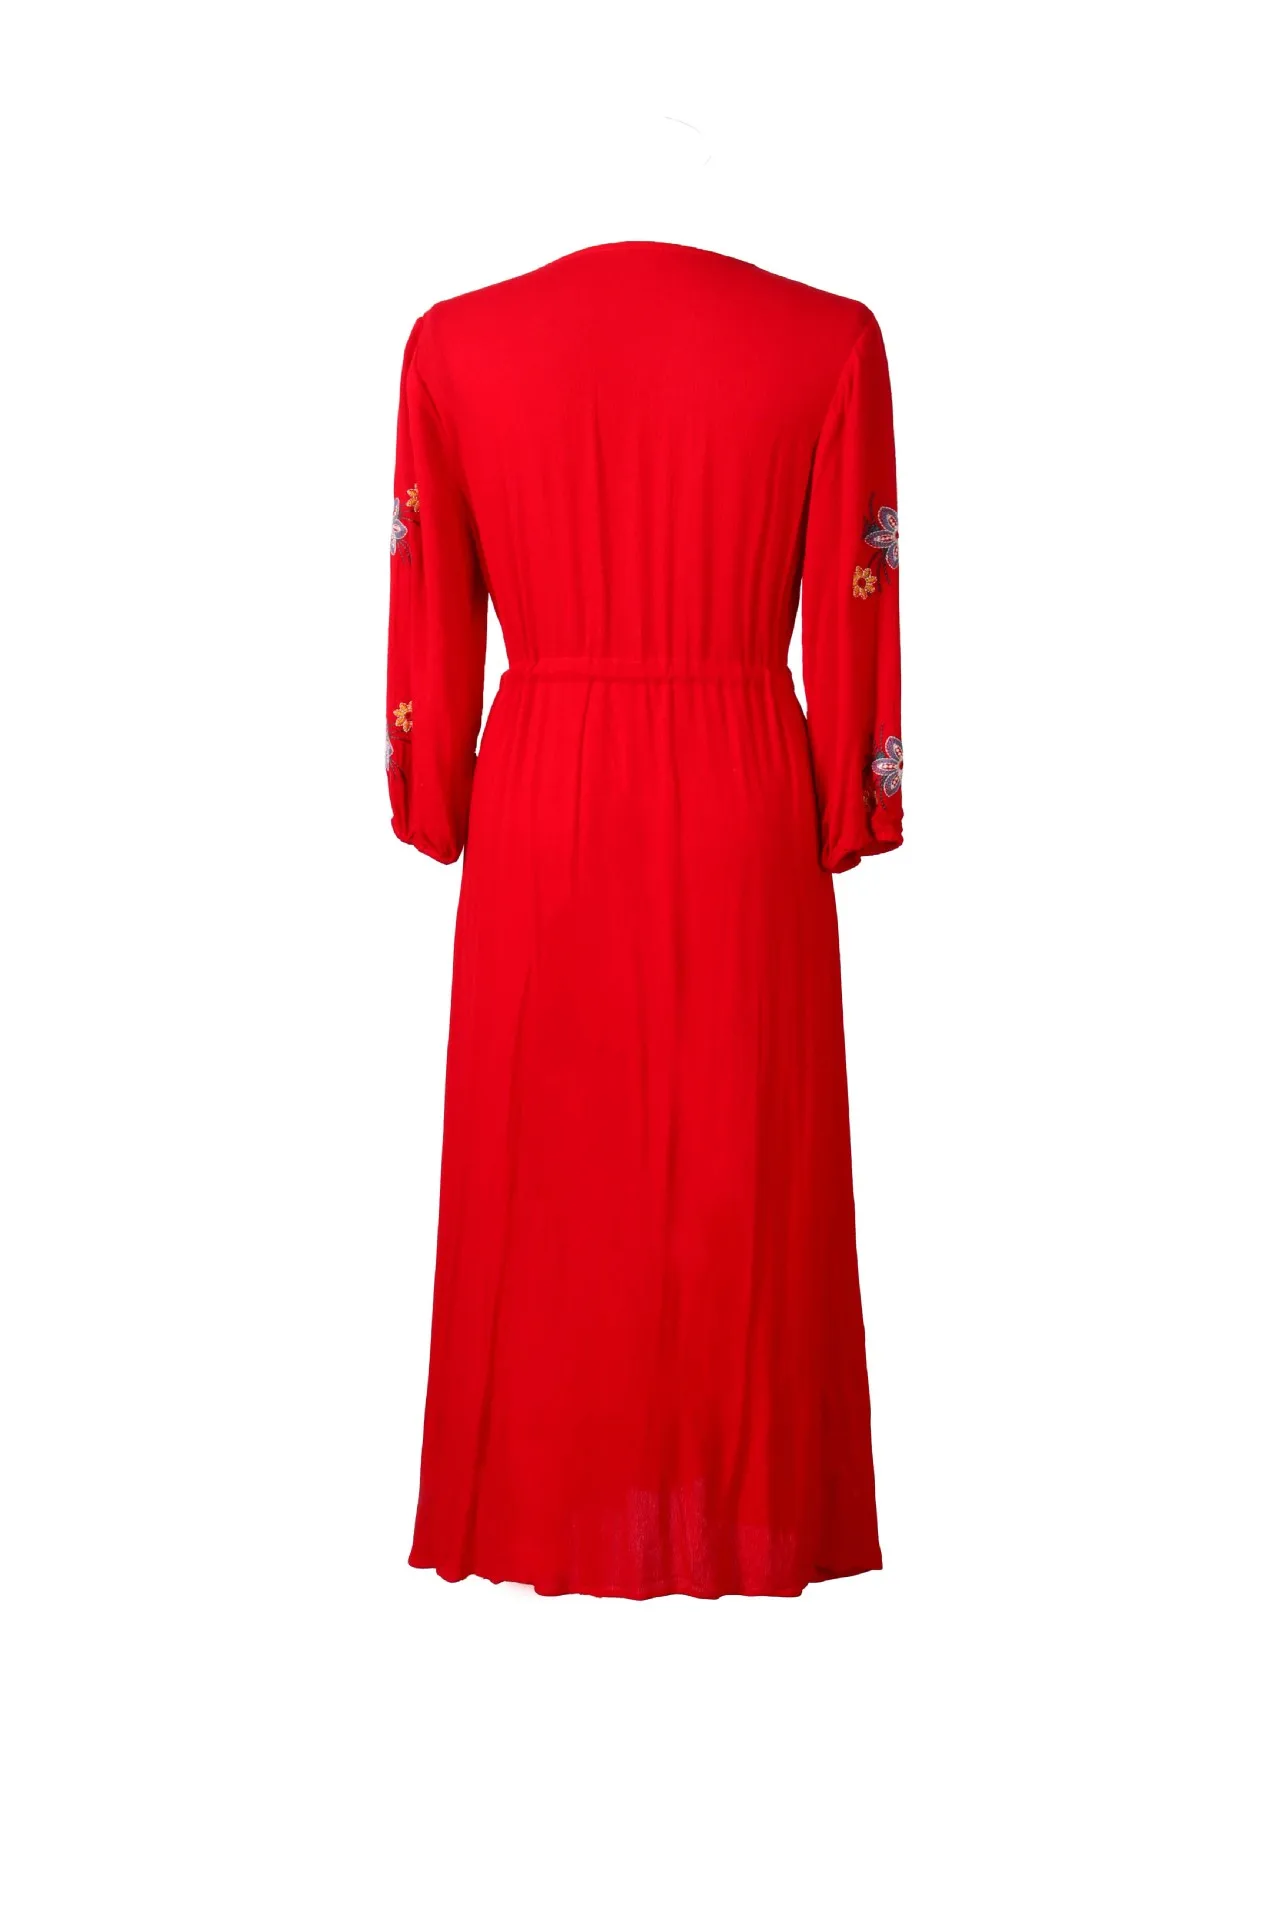 Sexy Sheath Dress for Women Solid V-neck Shirring Long Sleeve Irregular Hem Dresses Early Autumn New Party Dress